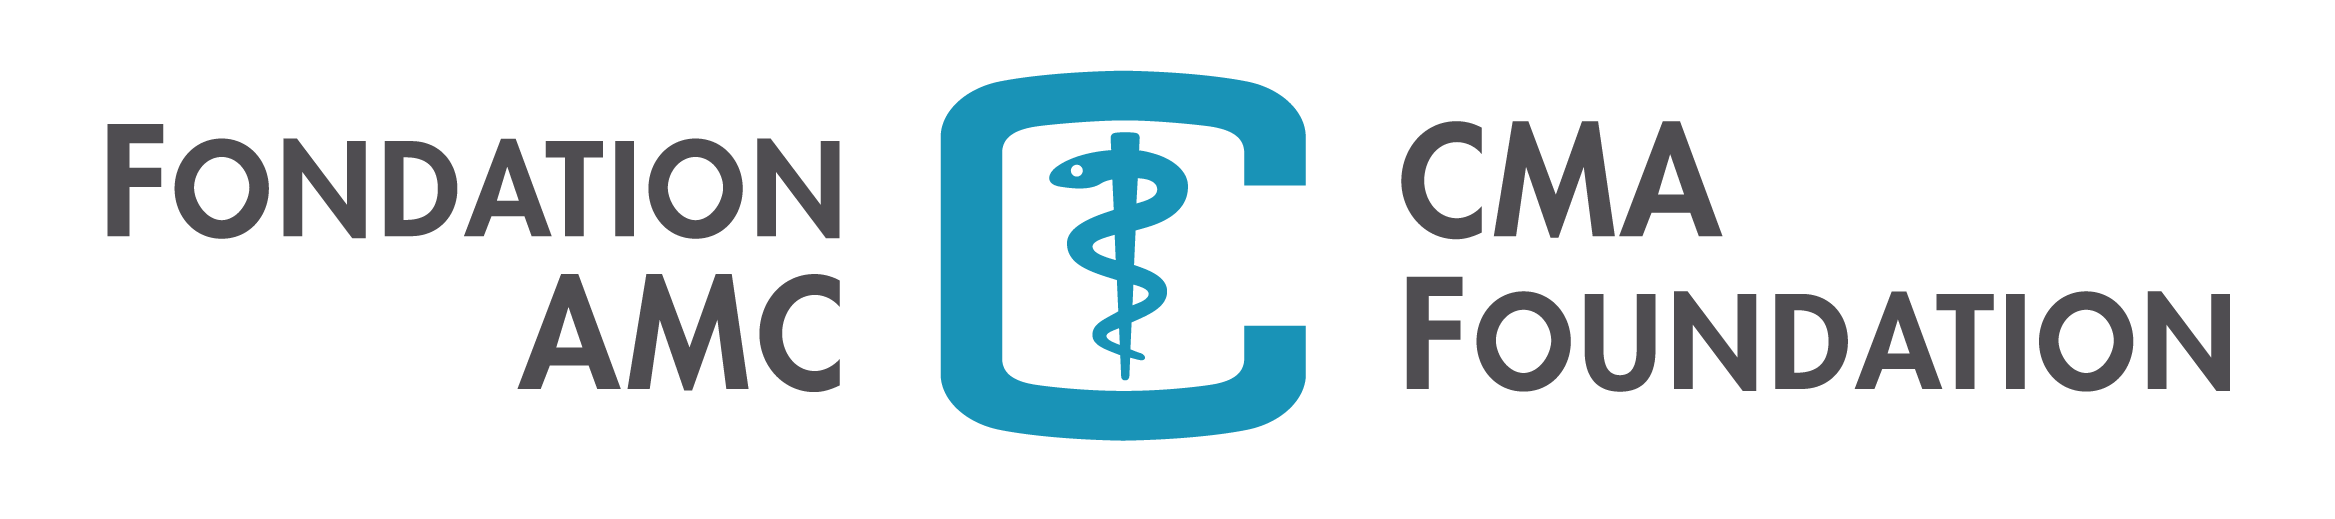 cmaf-logo.png